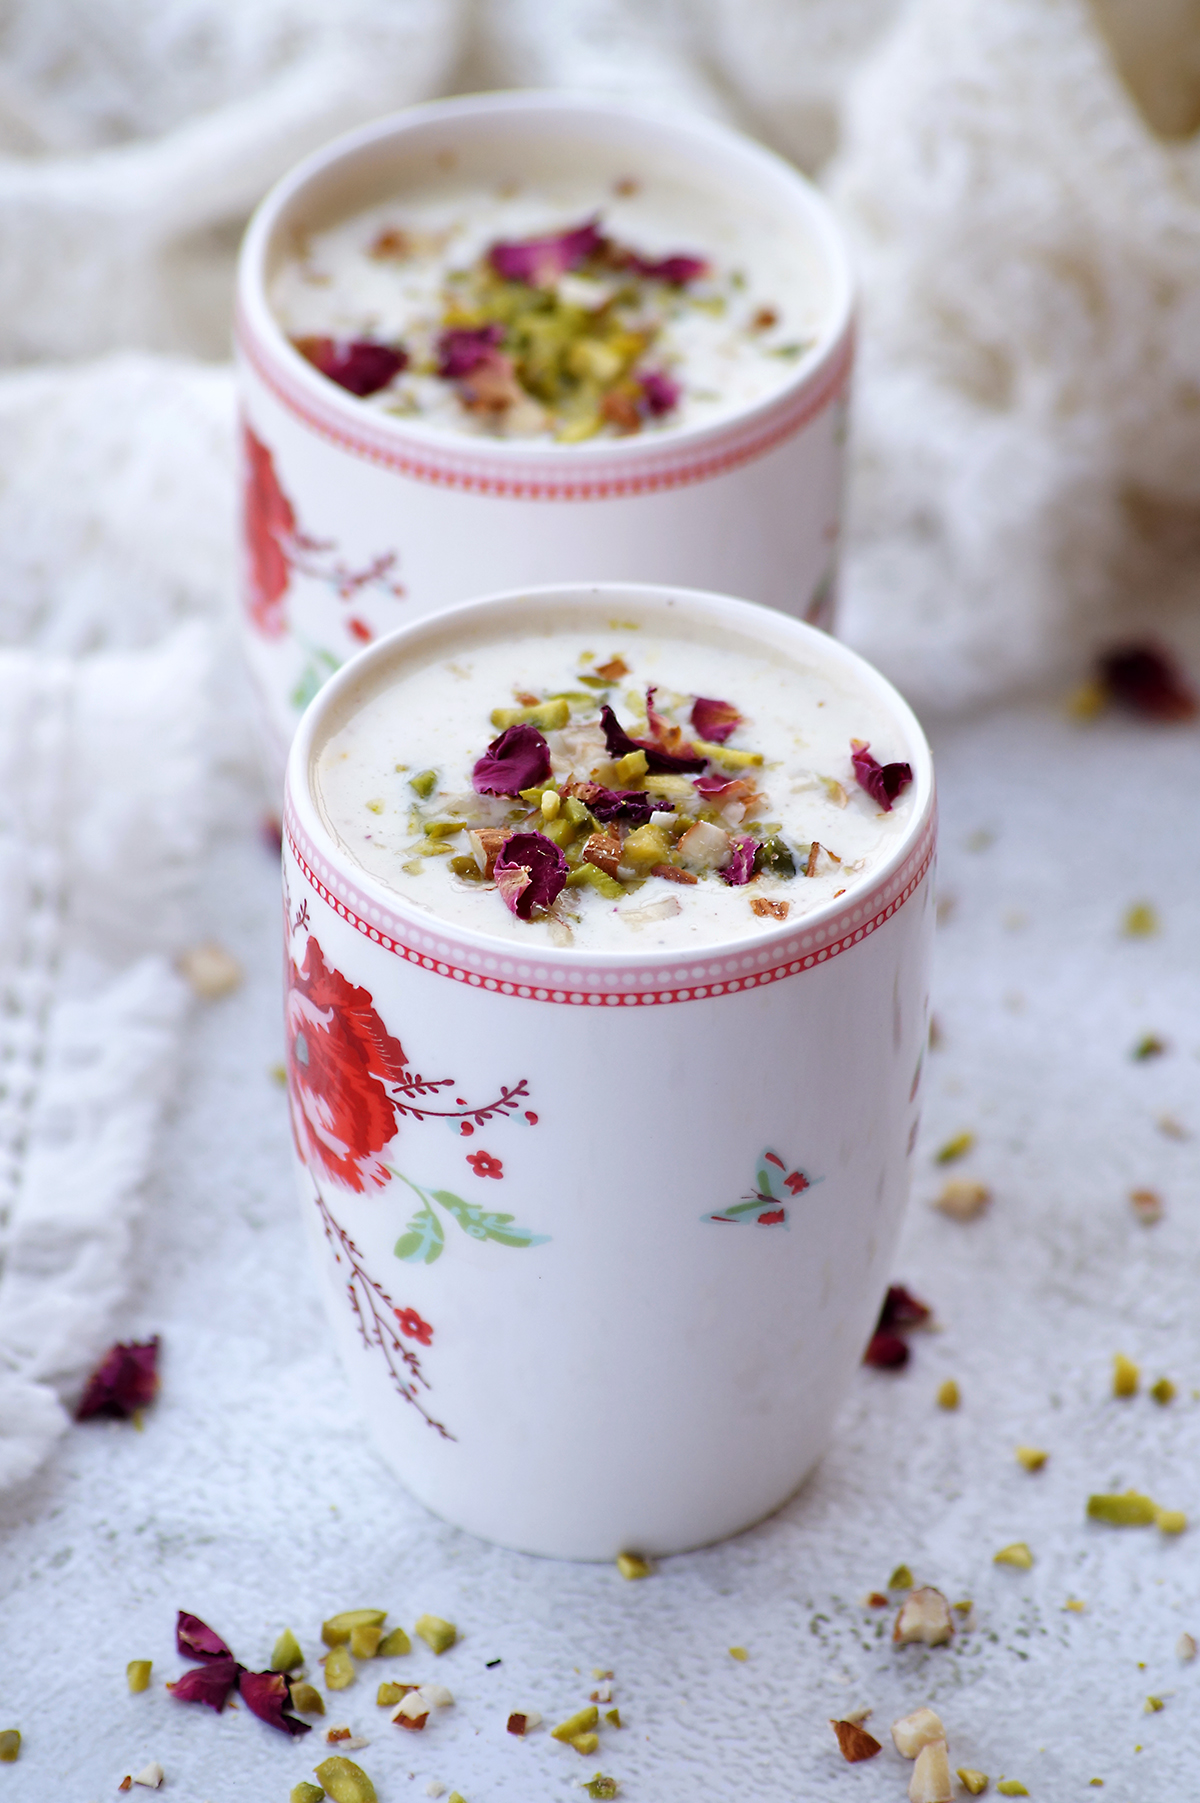 5-Minute Refreshing Lassi Recipe (Indian Yogurt Drink) - Two